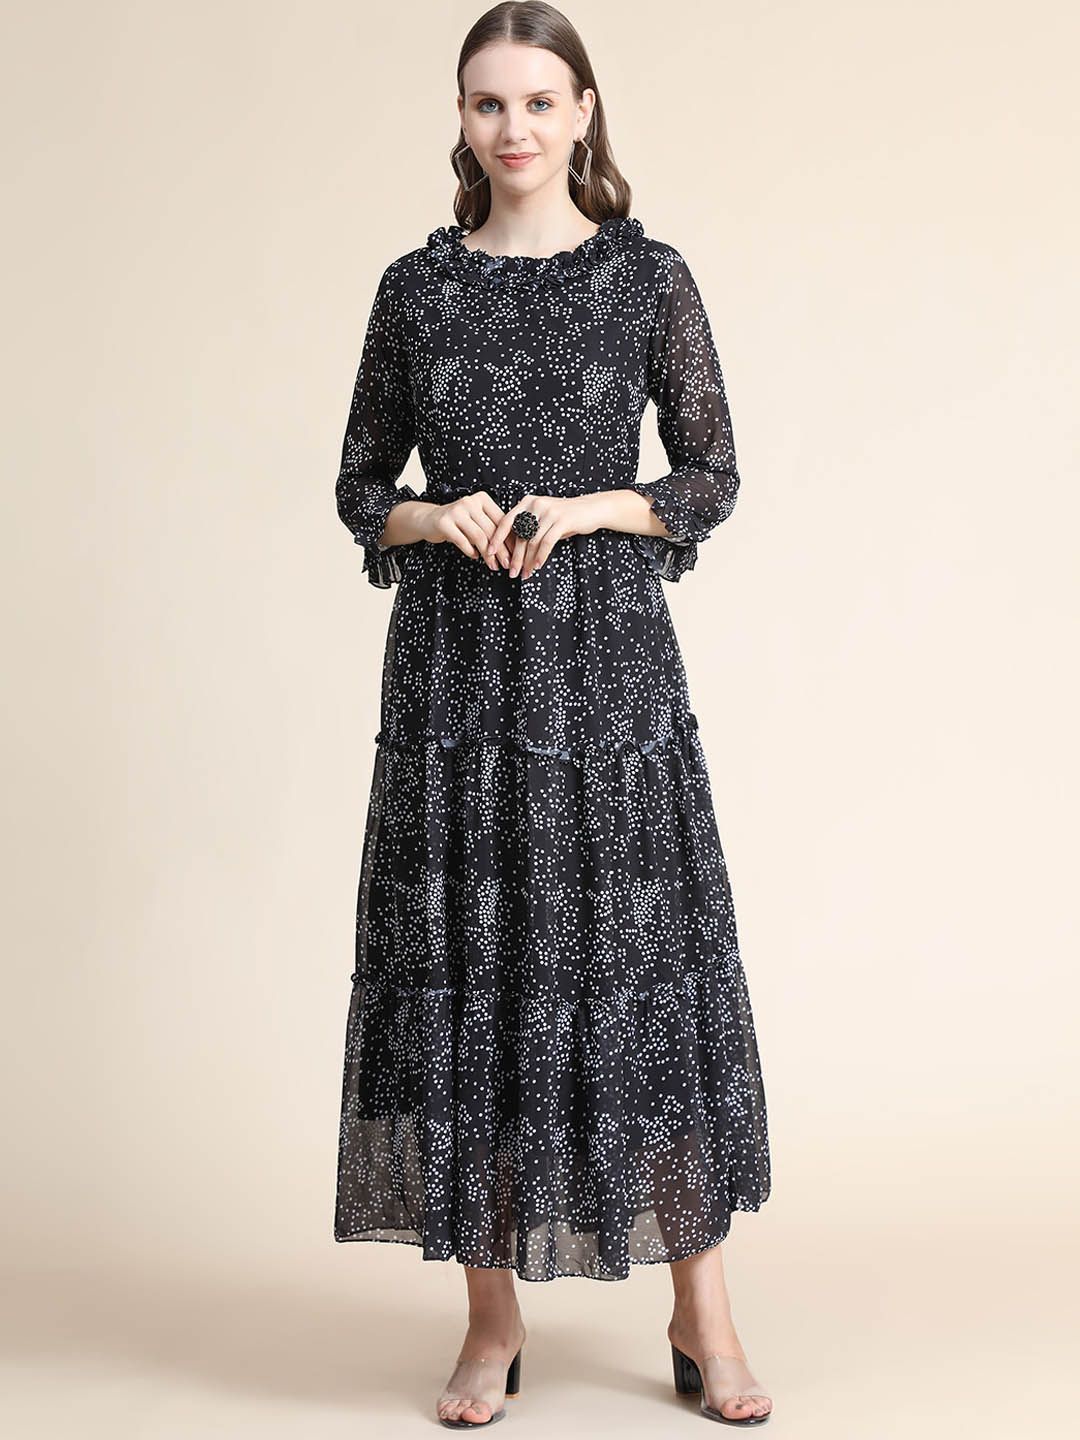 KALINI Black Ethnic Tiered Fit & Flare Midi Dress Price in India